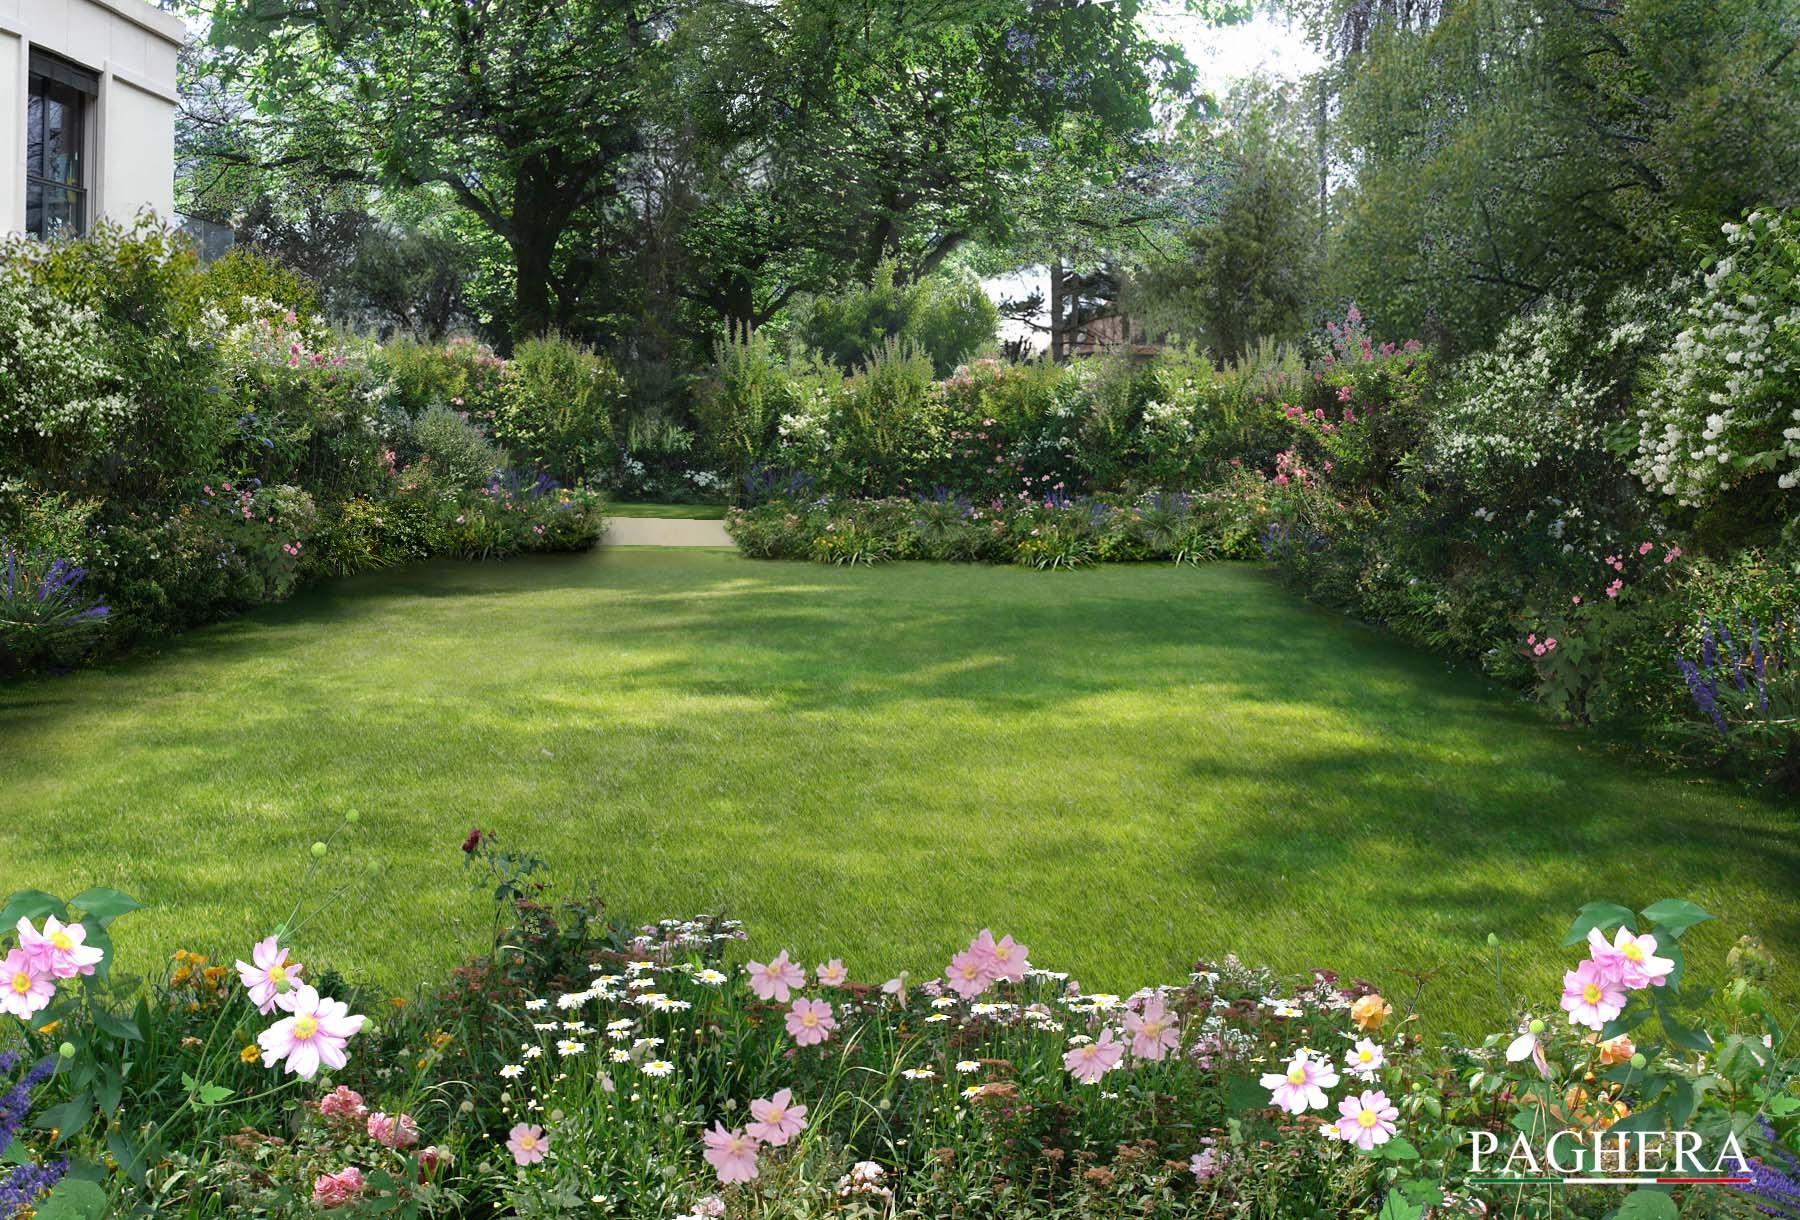 Villa to the Swiss limits - Gardens